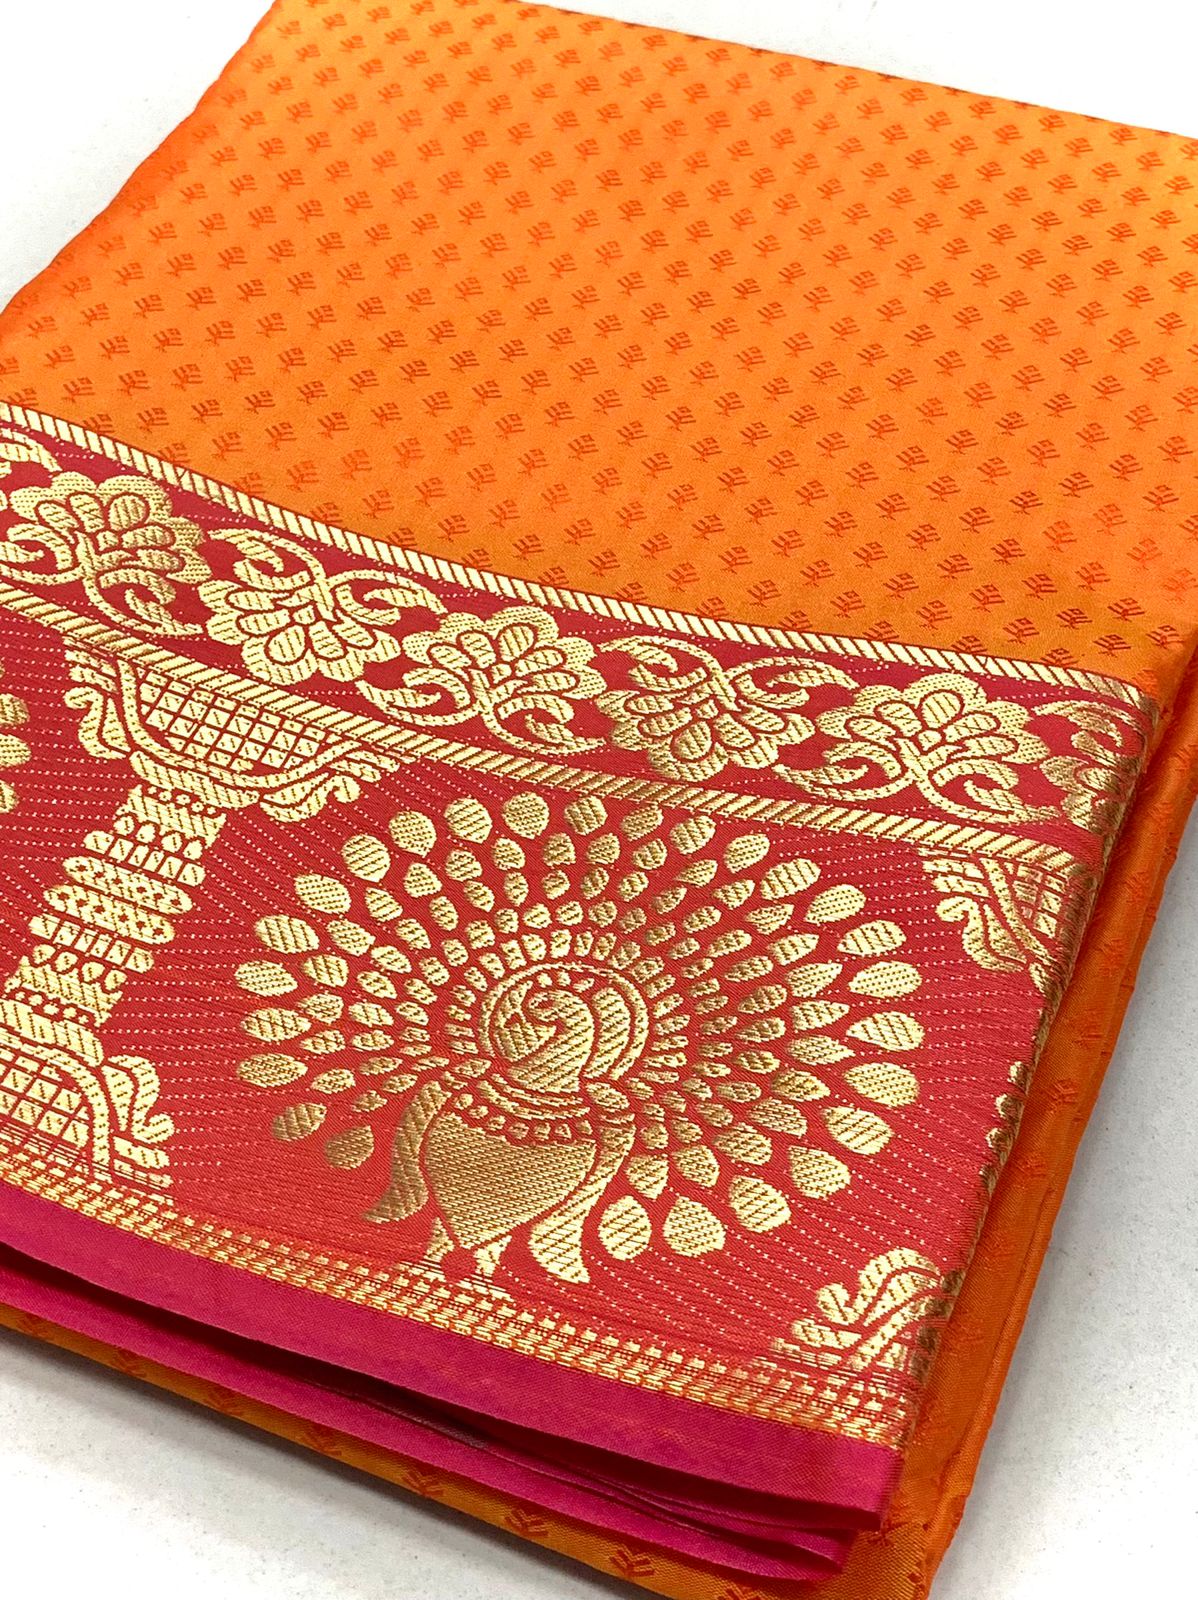 vivera international Pankhudi 2 Sarees soft silk elegant saree catalog